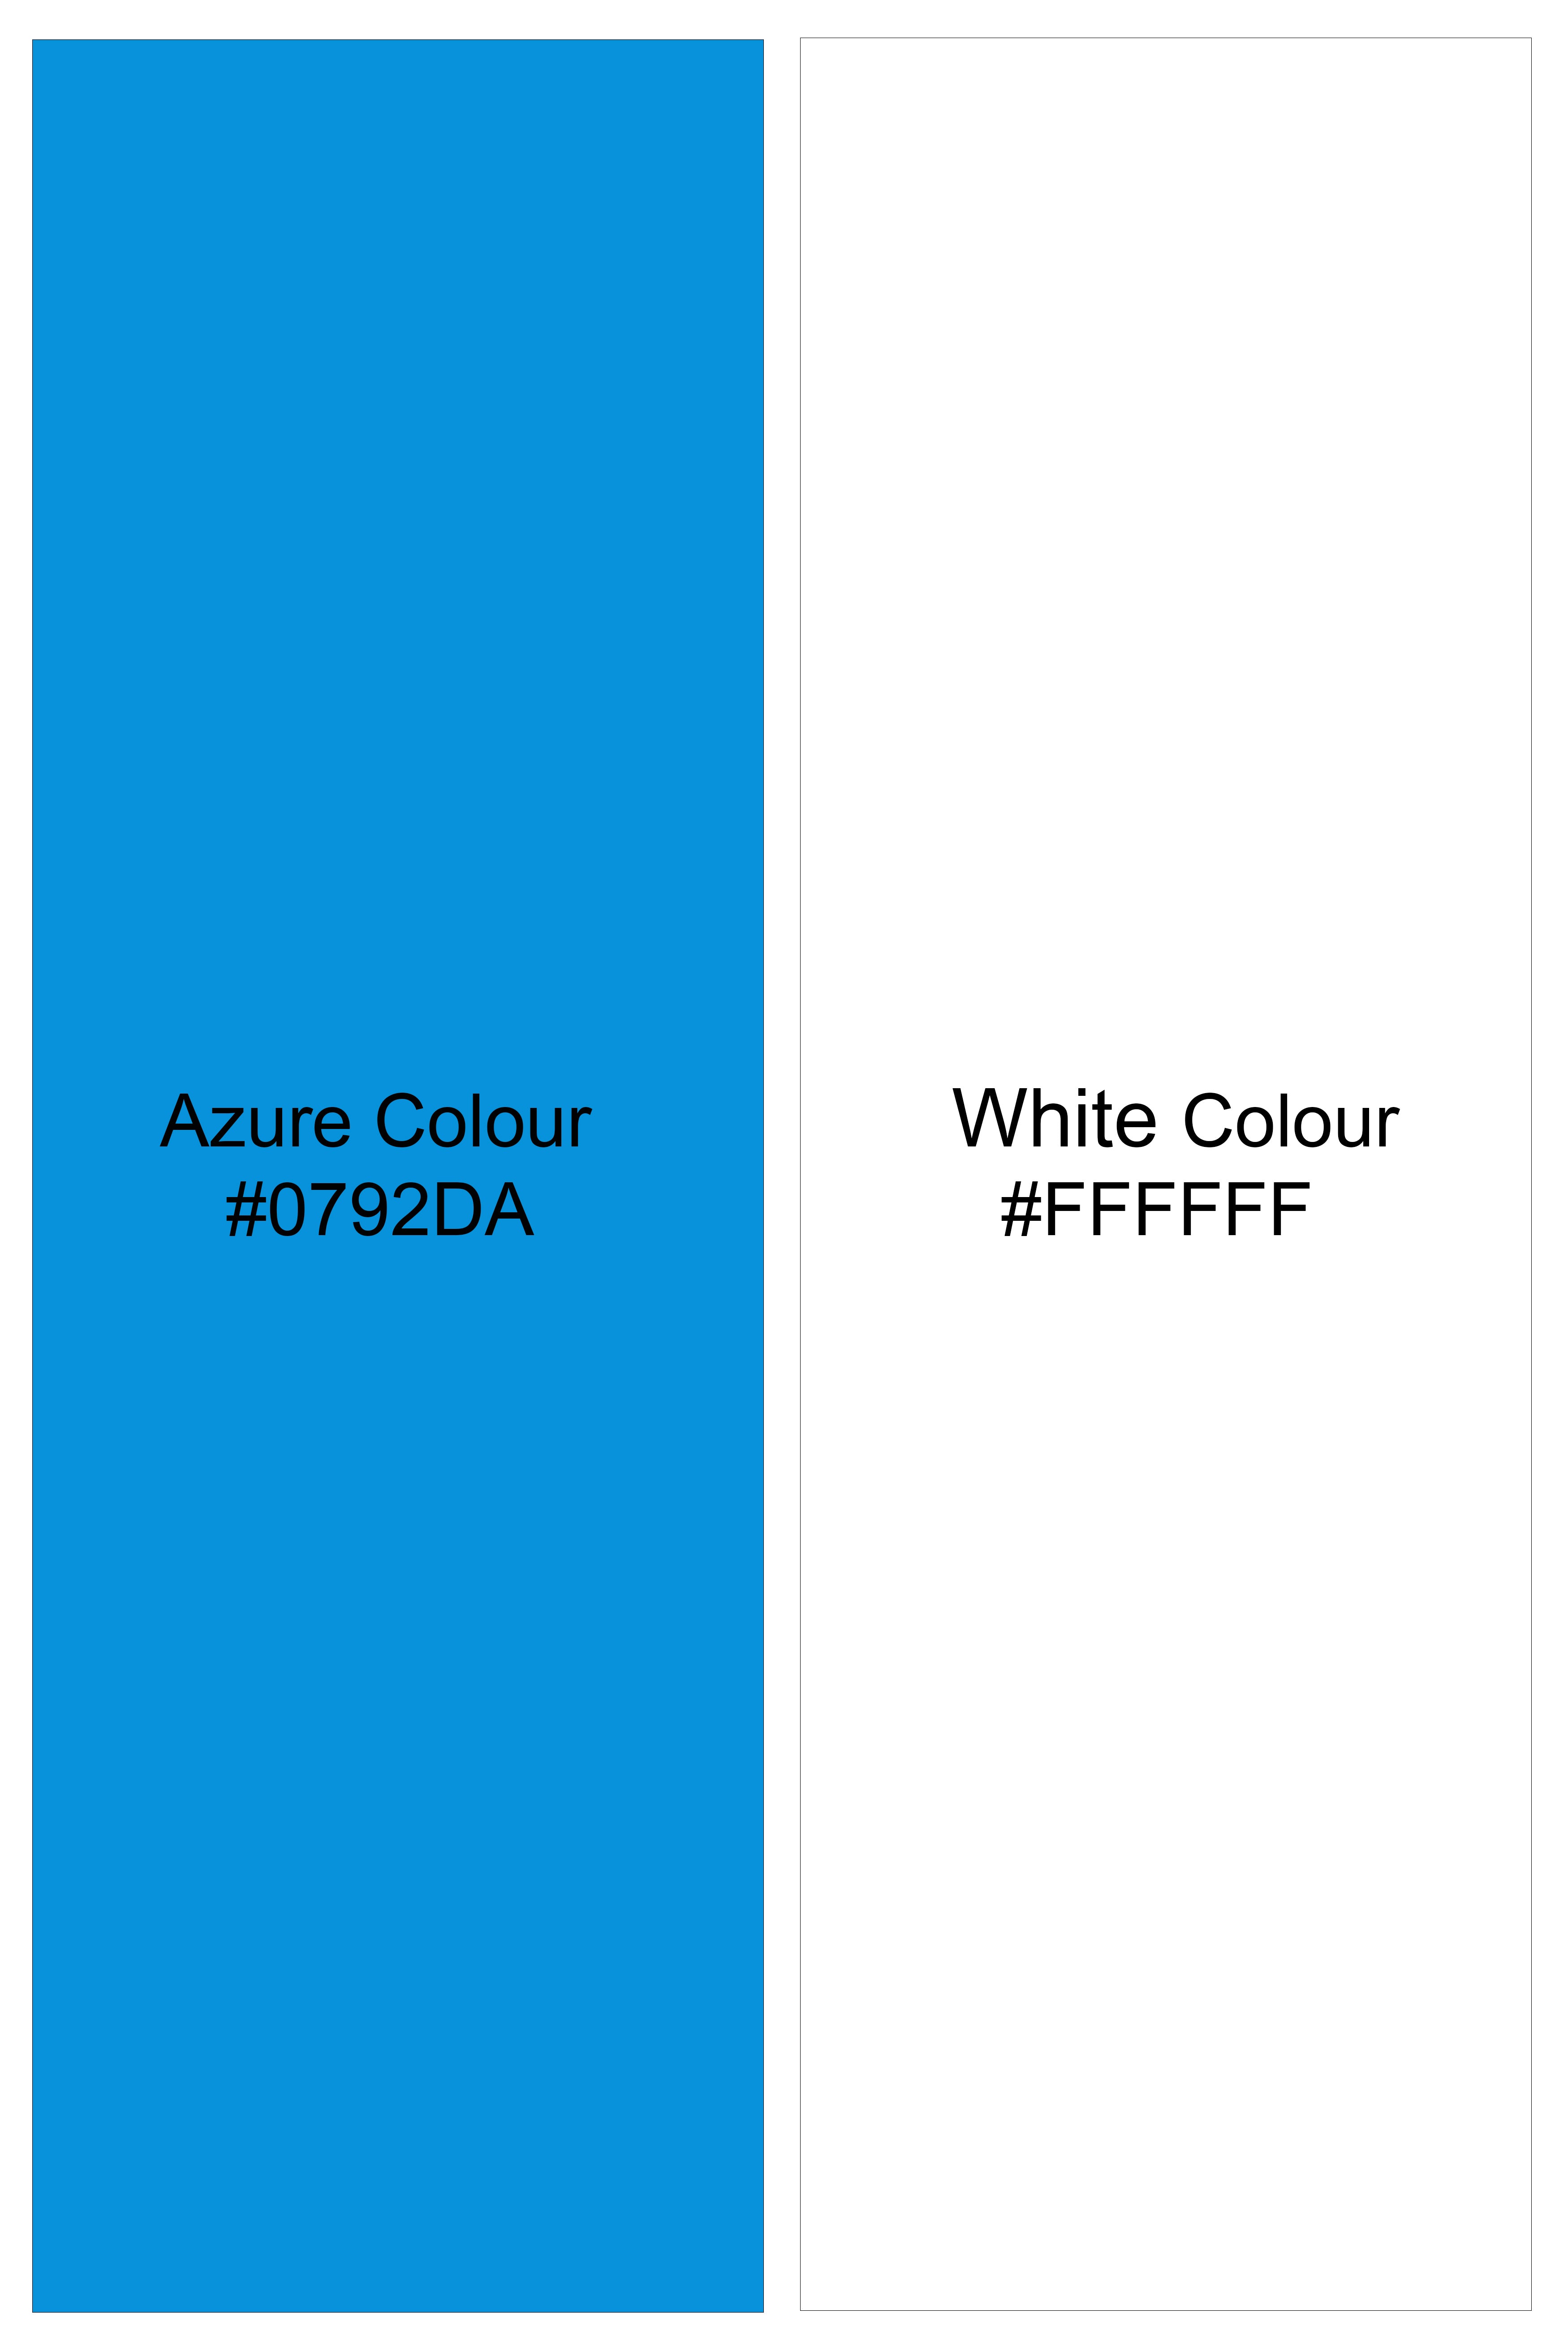 Azure Blue with White Ocean Printed Super Soft Premium Cotton Shirt